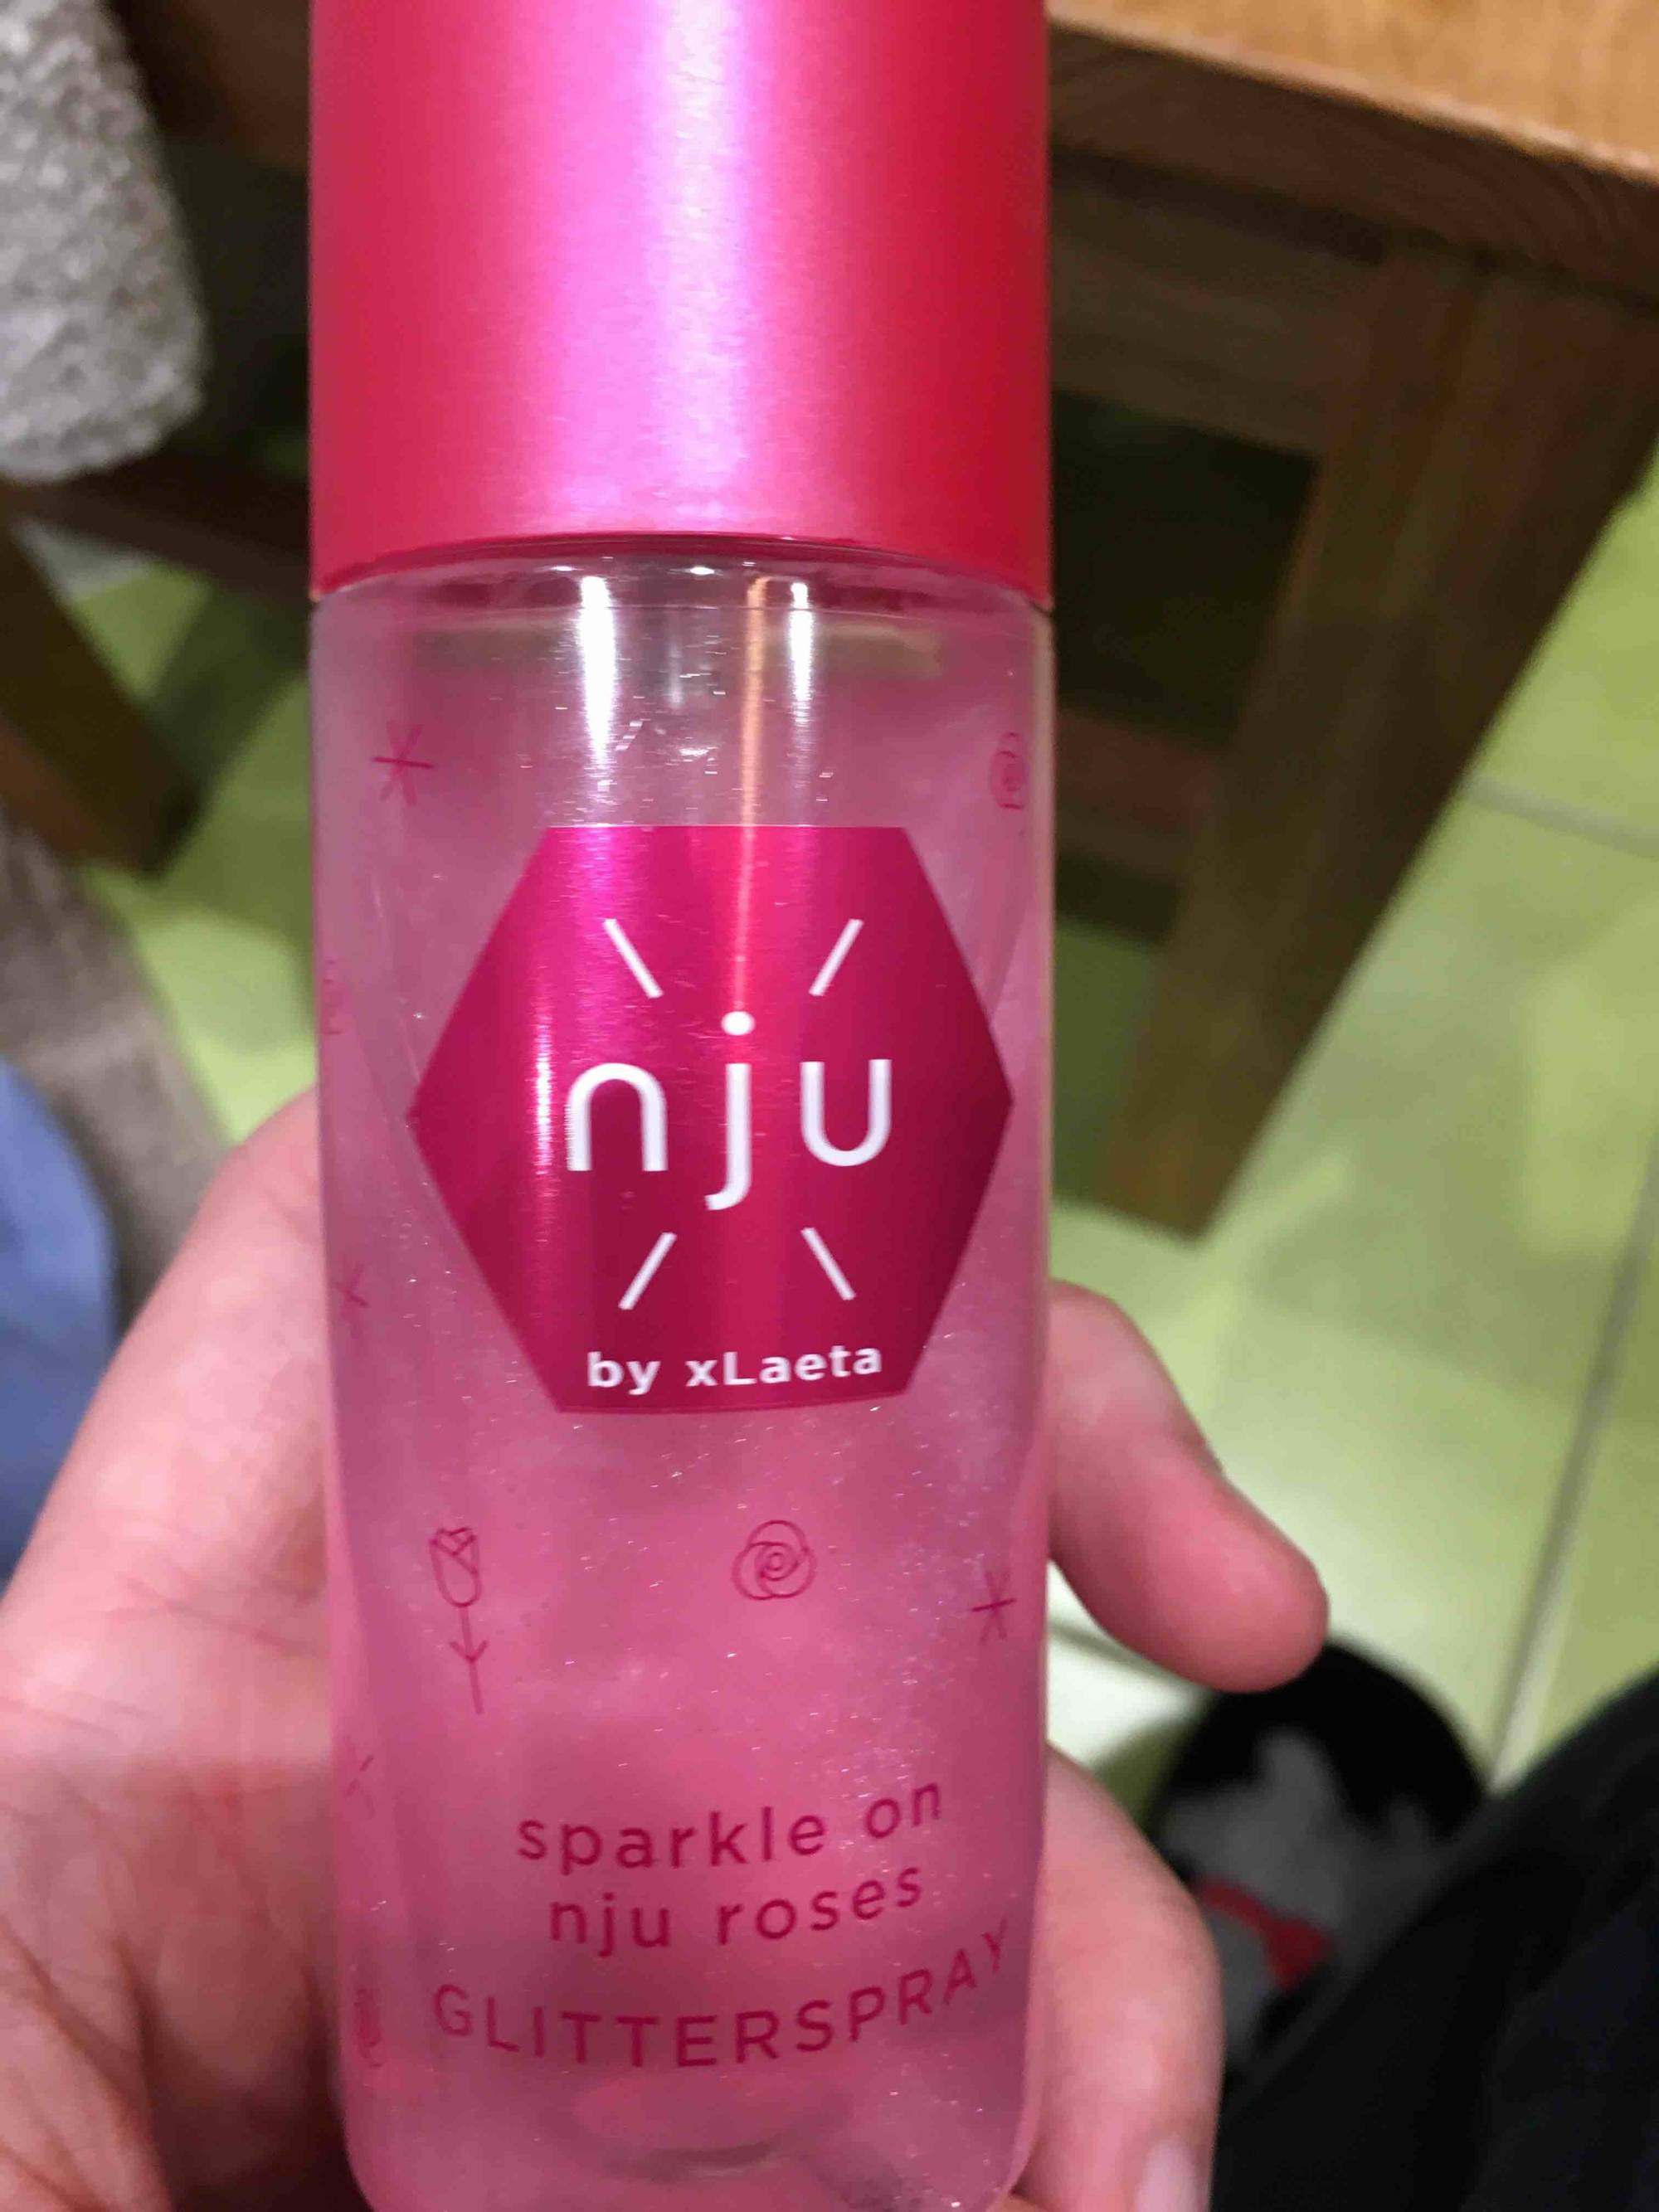 NJU BY XLAETA - Sparkle on nju roses - Glitter spray